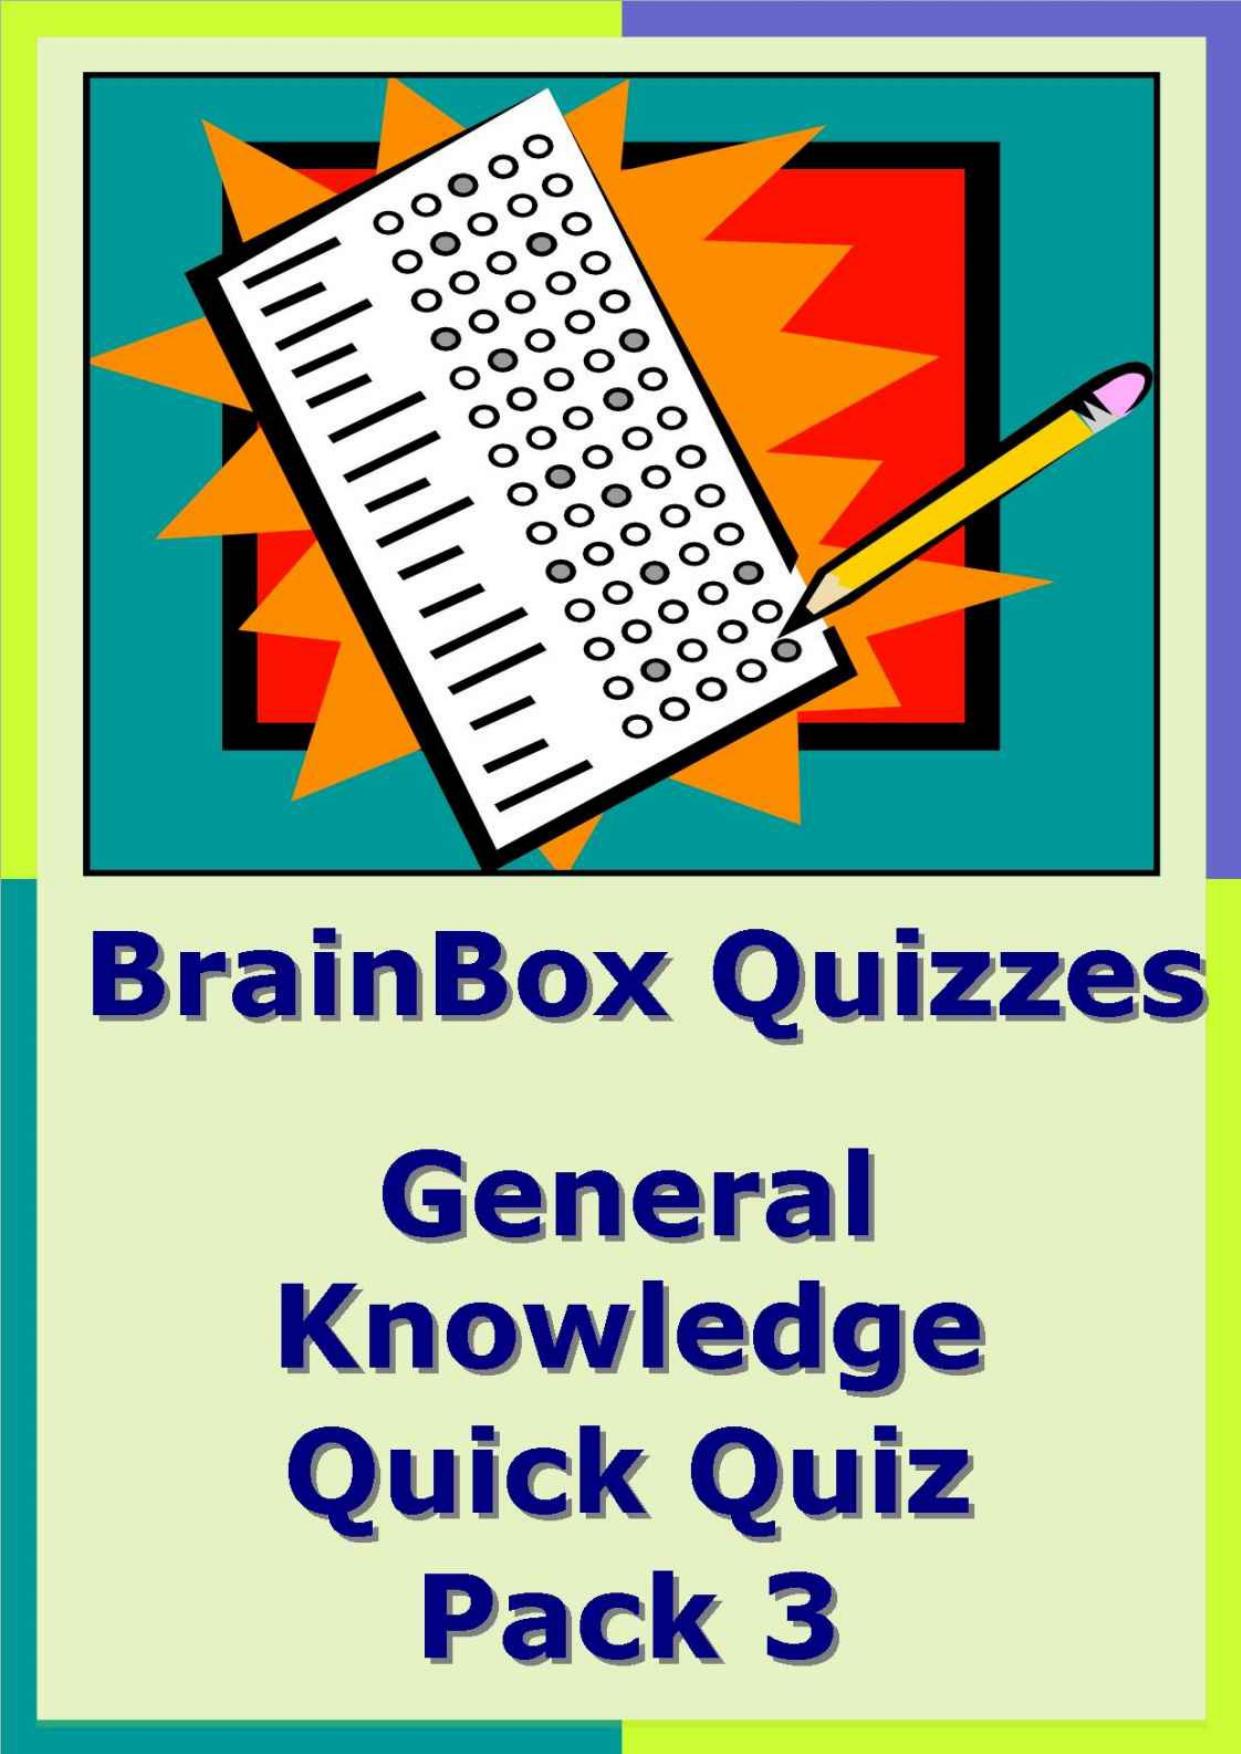 BrainBox Quizzes General Knowledge Quick Quiz Pack 3